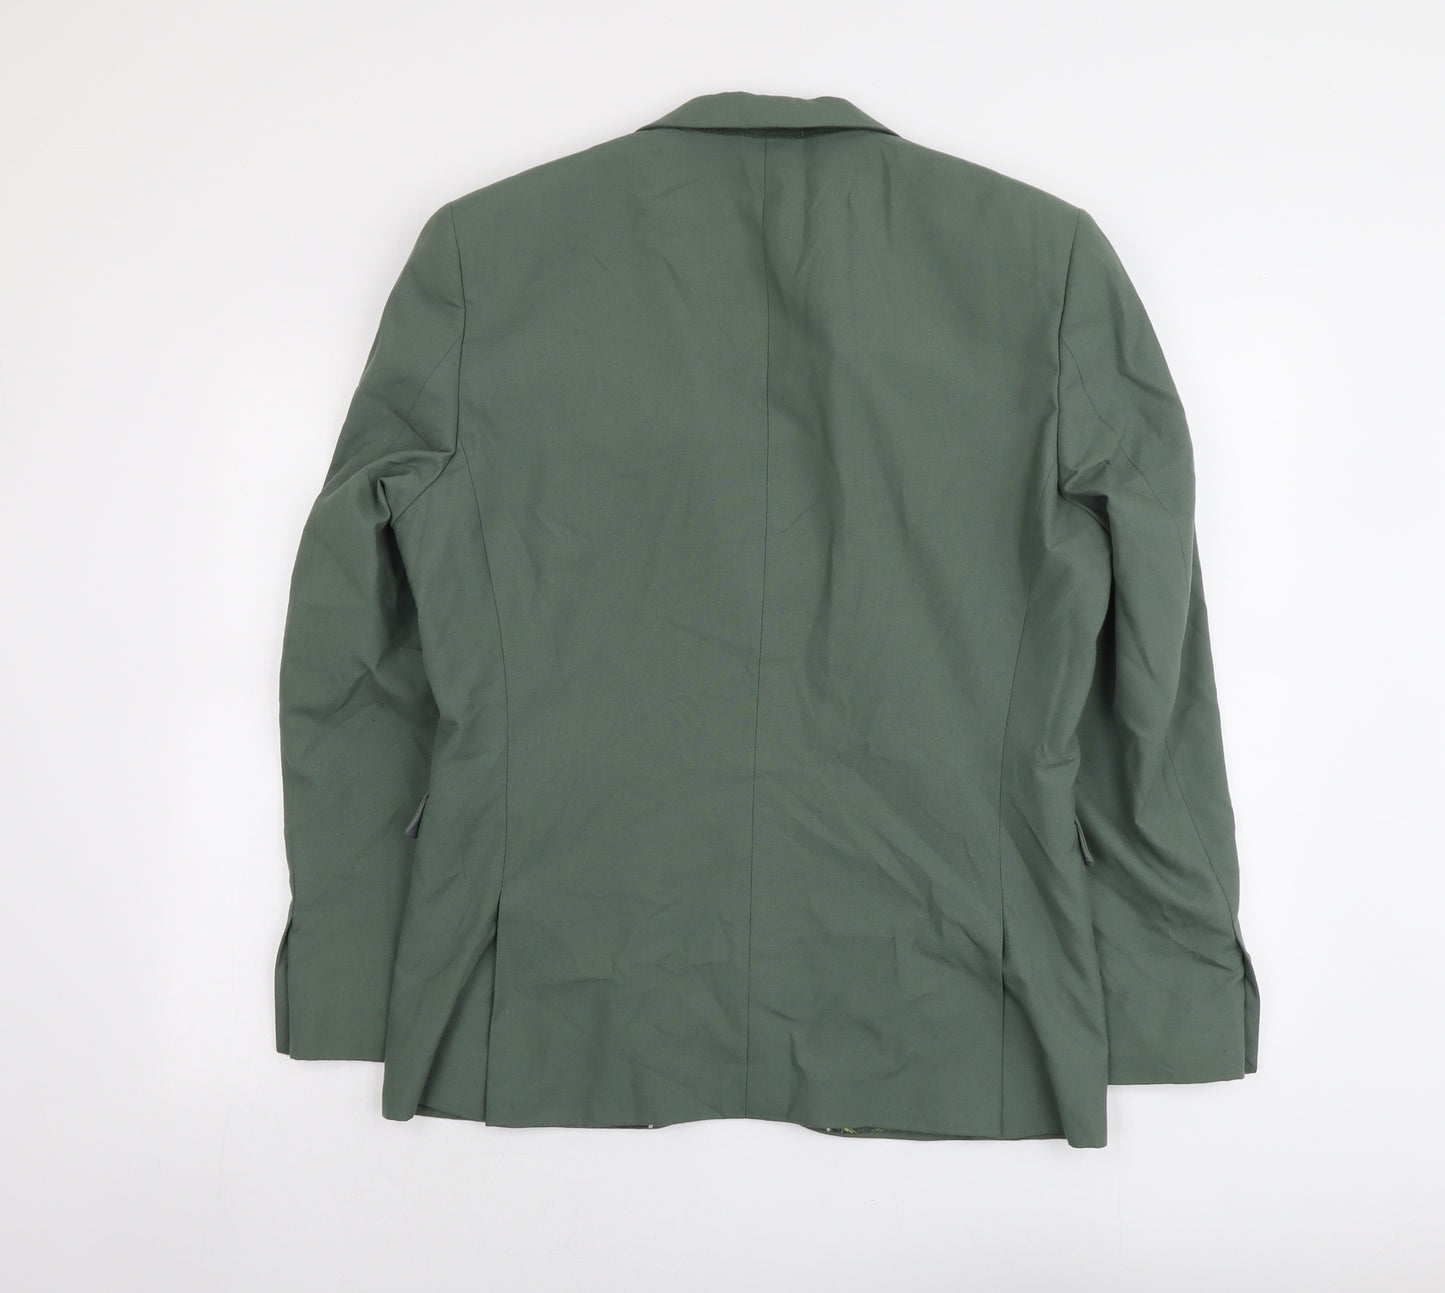 NEXT Mens Green Polyester Jacket Suit Jacket Size 42 Regular